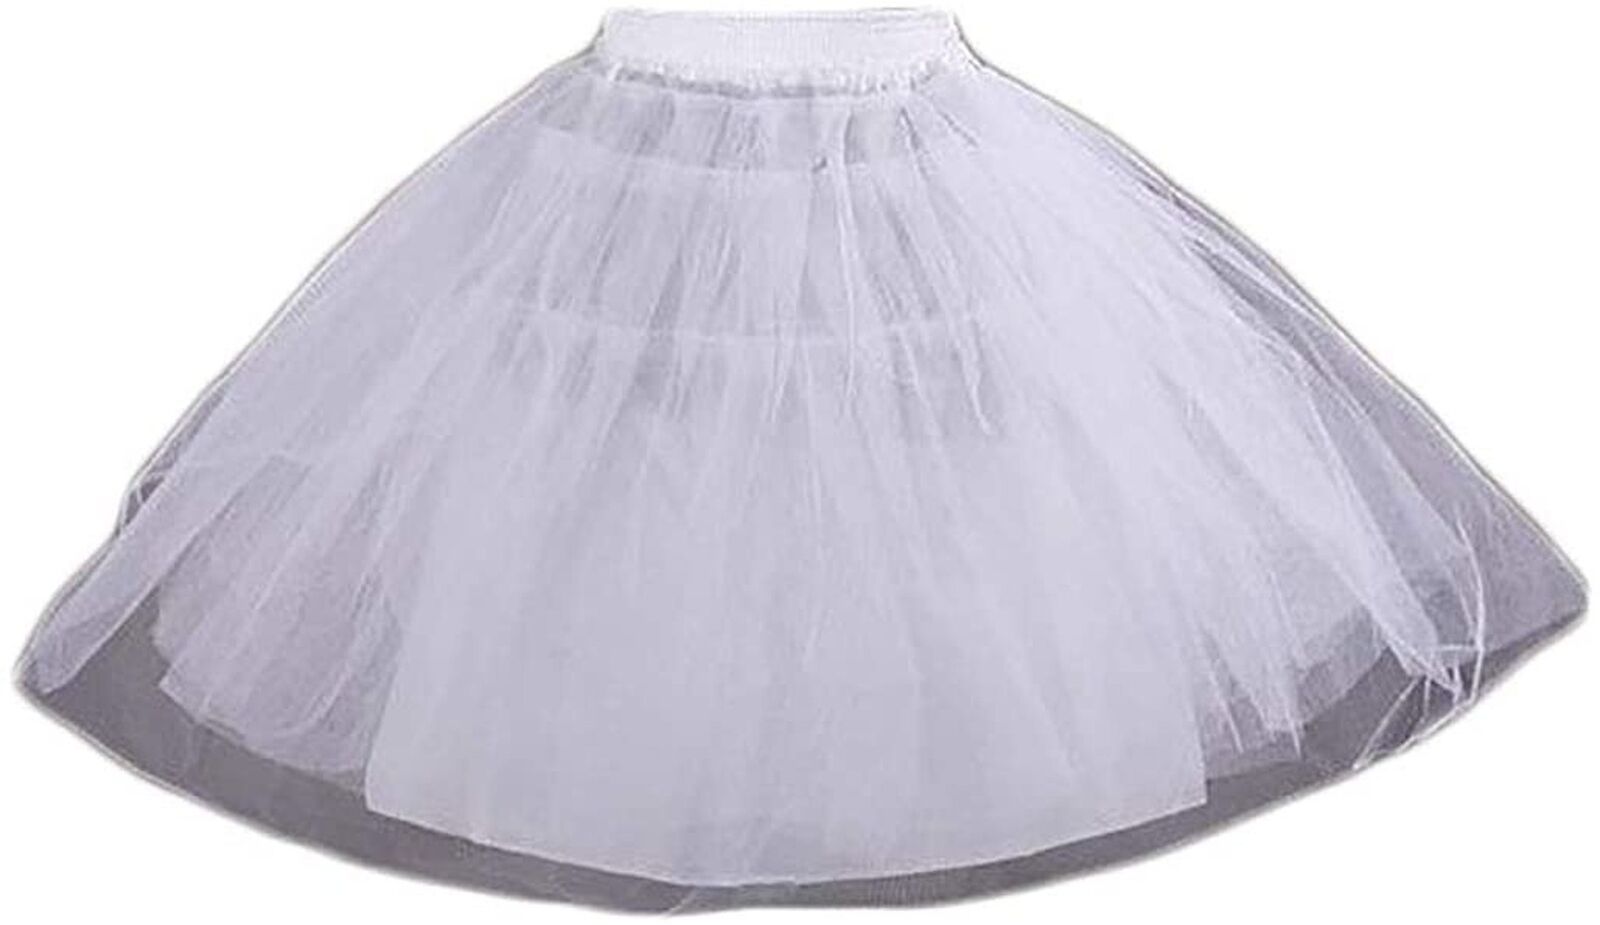 3 Layers Girls Slip Flower Girl Petticoat Crinoline Hoopless Skirt ...